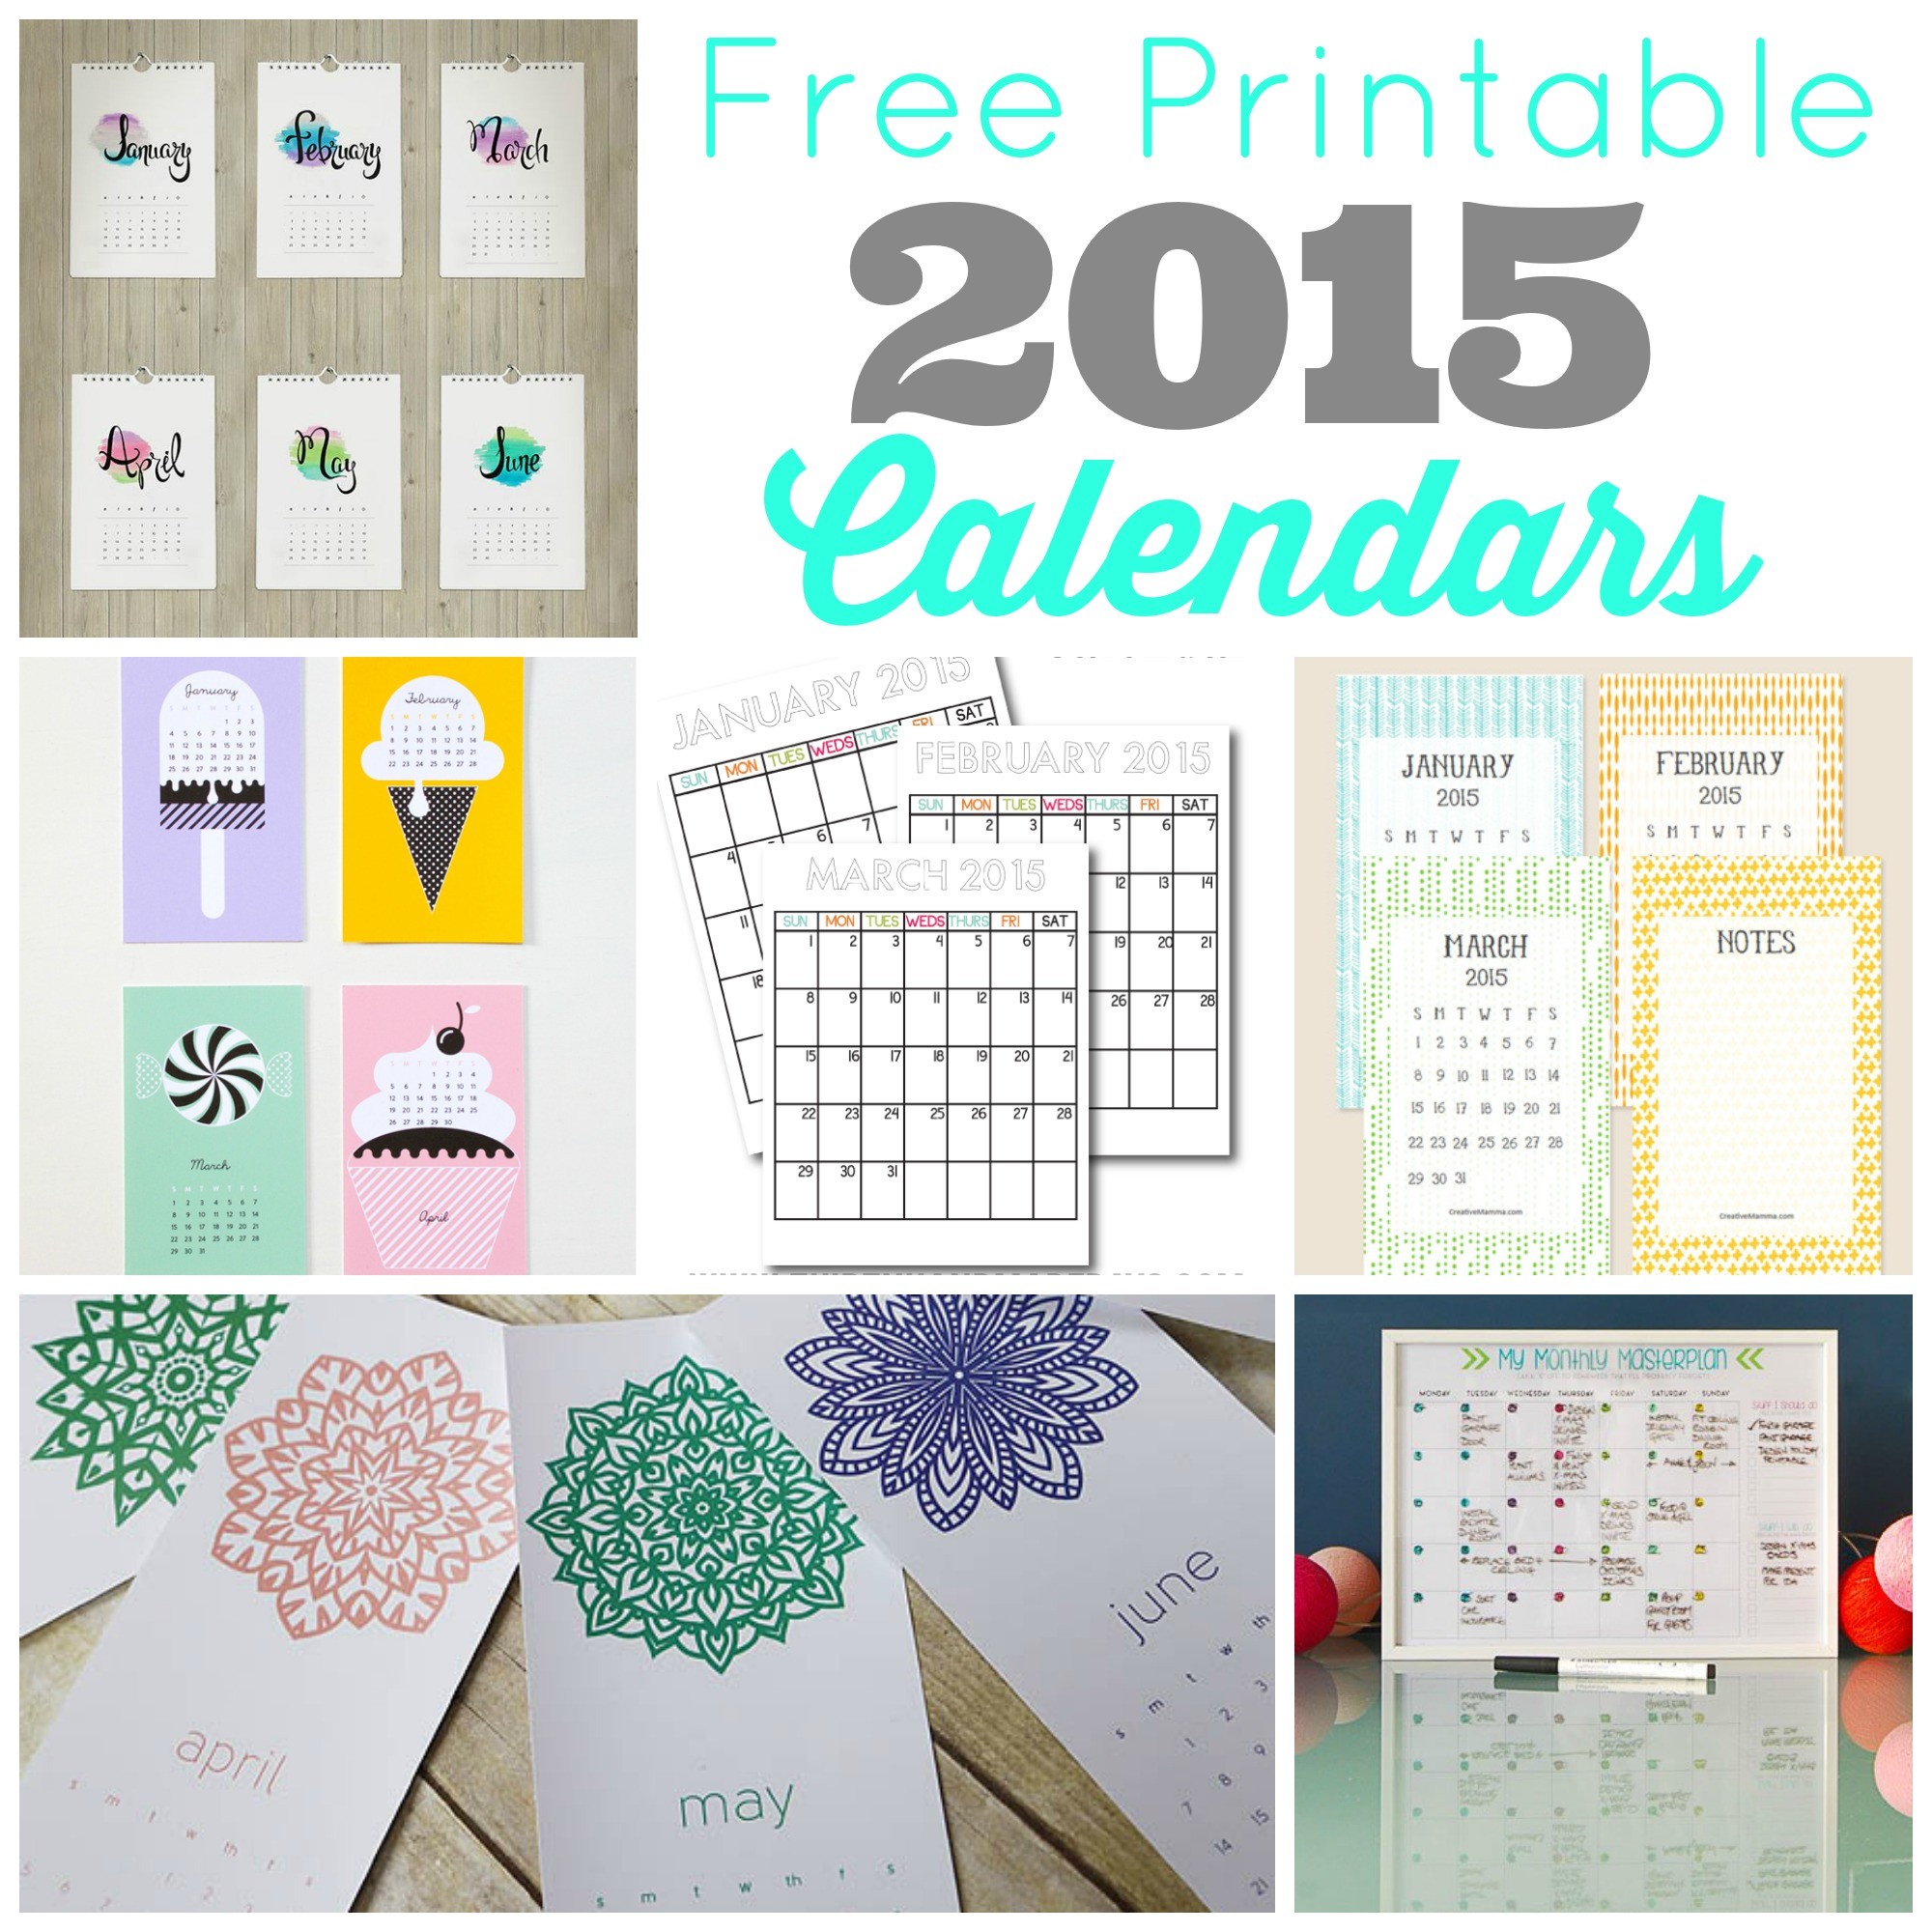 Free printable 2015 Calendars